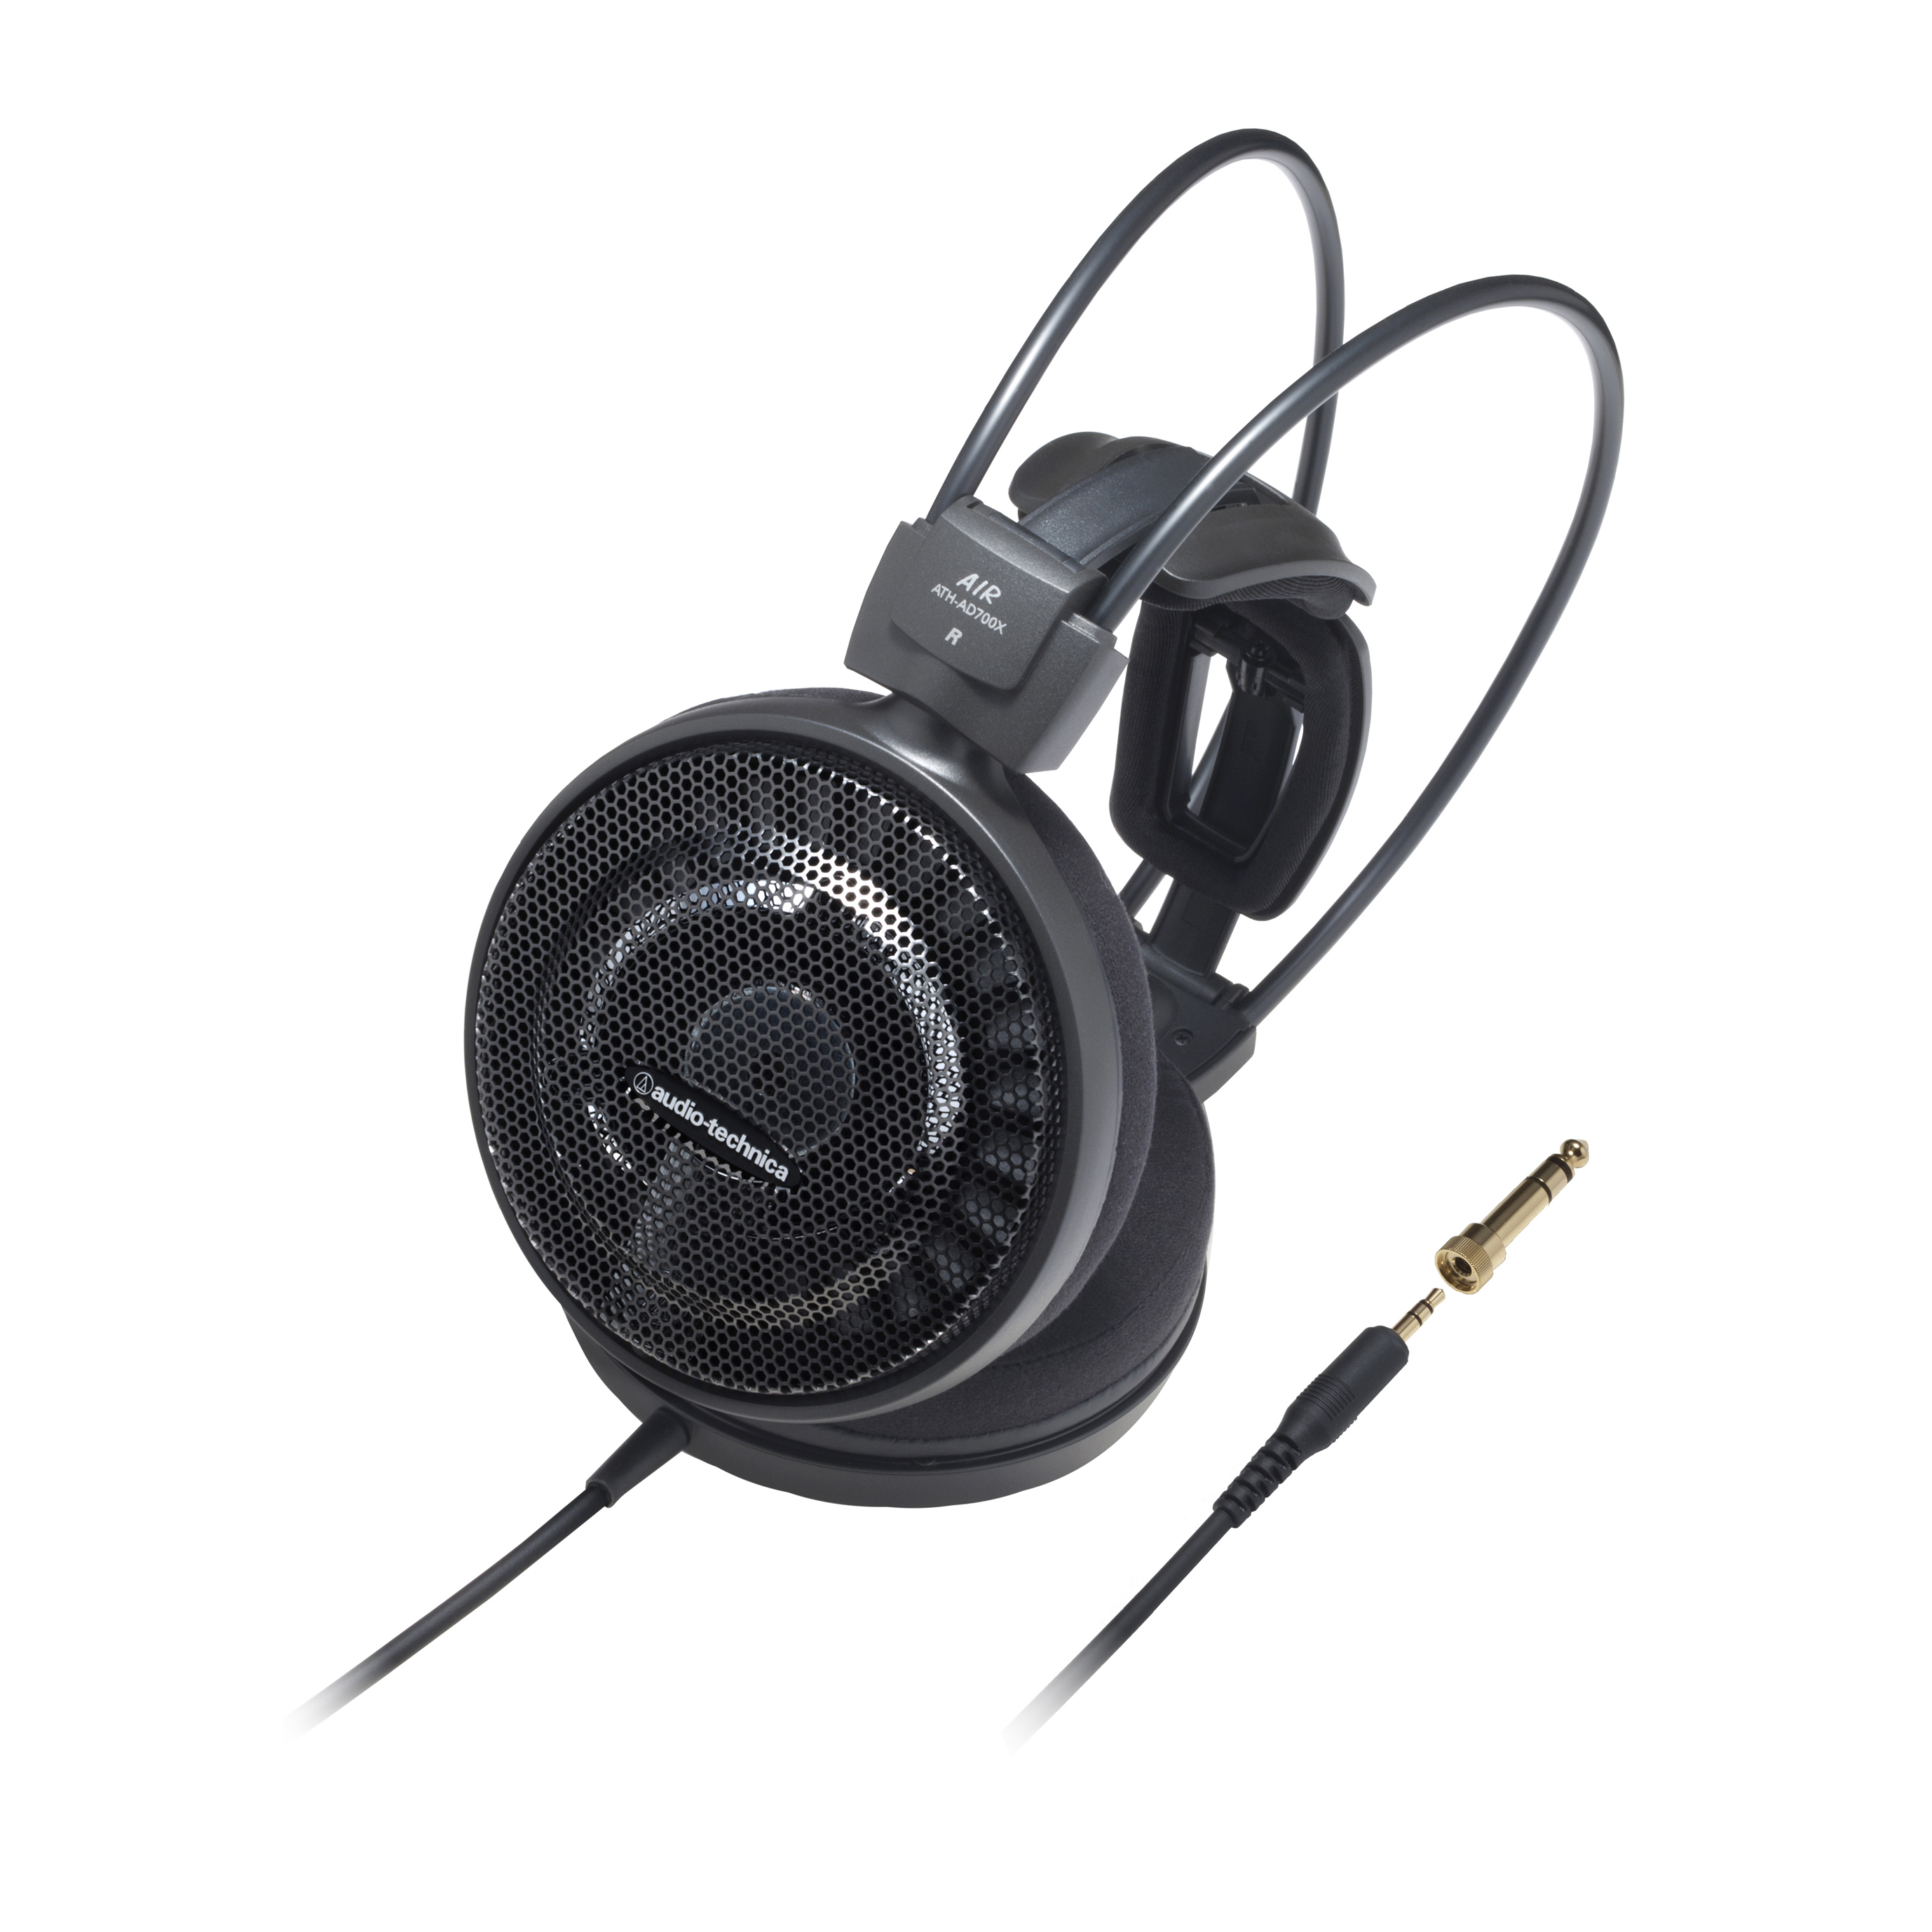 Audio Technica ATH-AD700X Audiophile Headphones - image 1 of 3